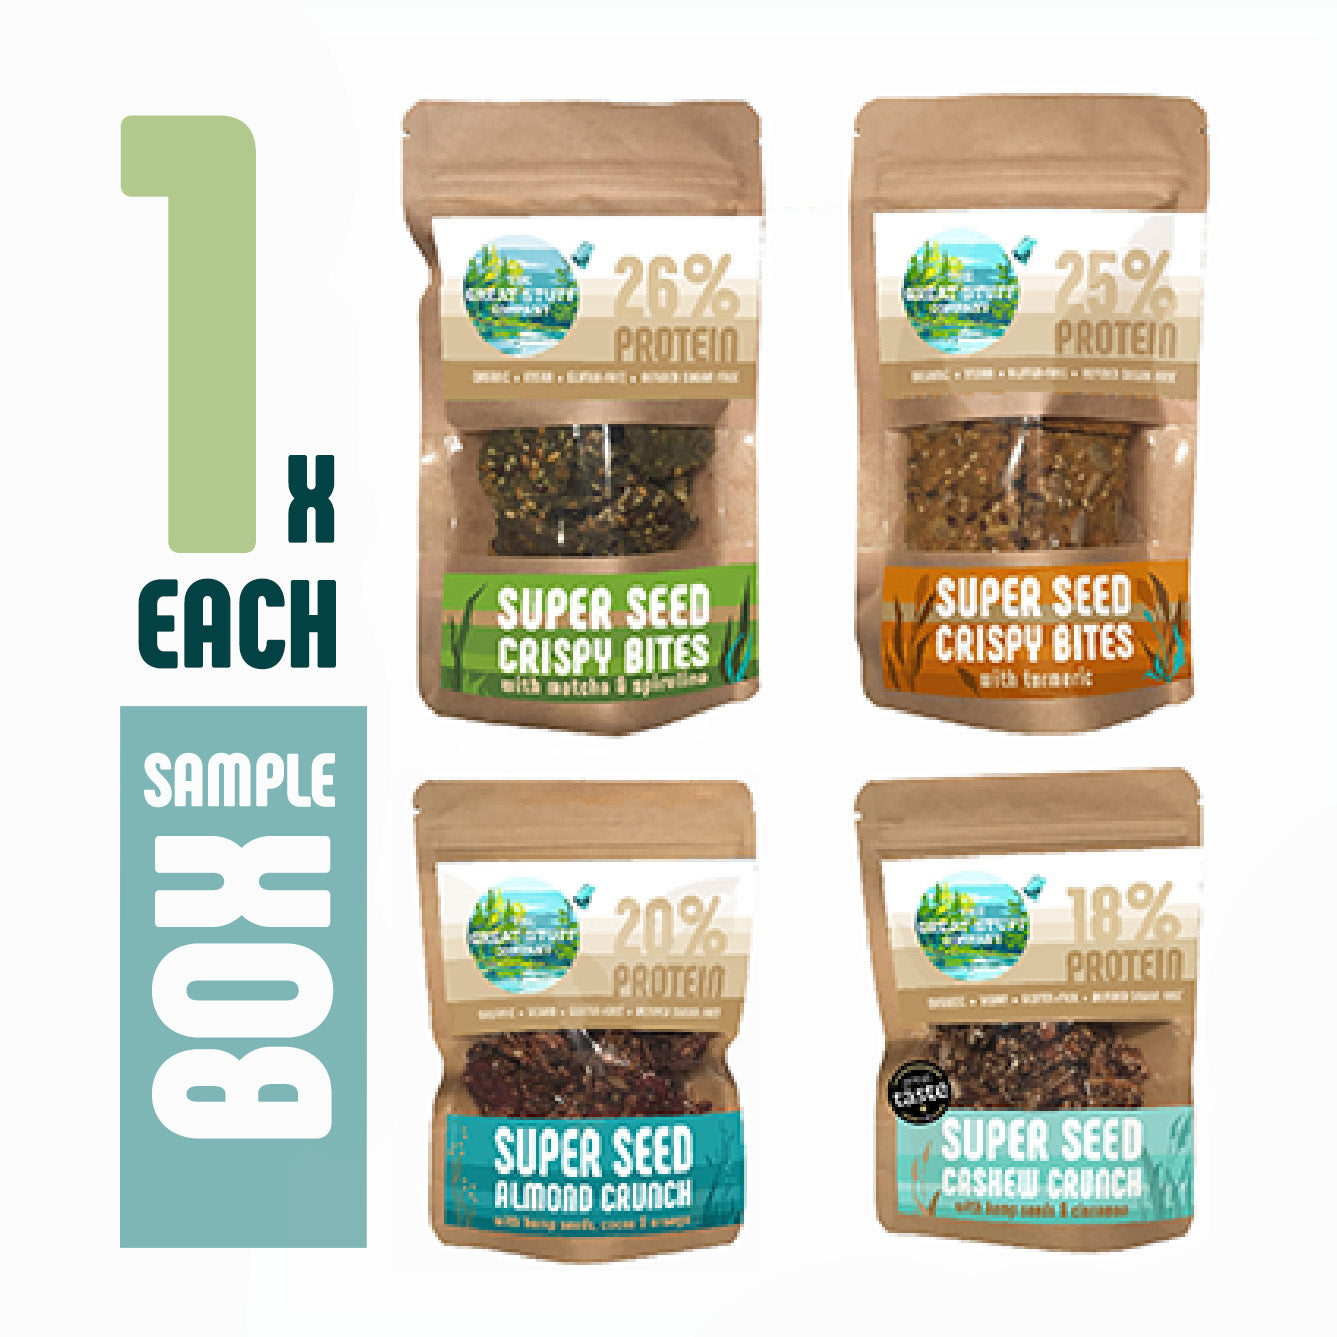 Sample Pack - Super Seed Range, free shipping